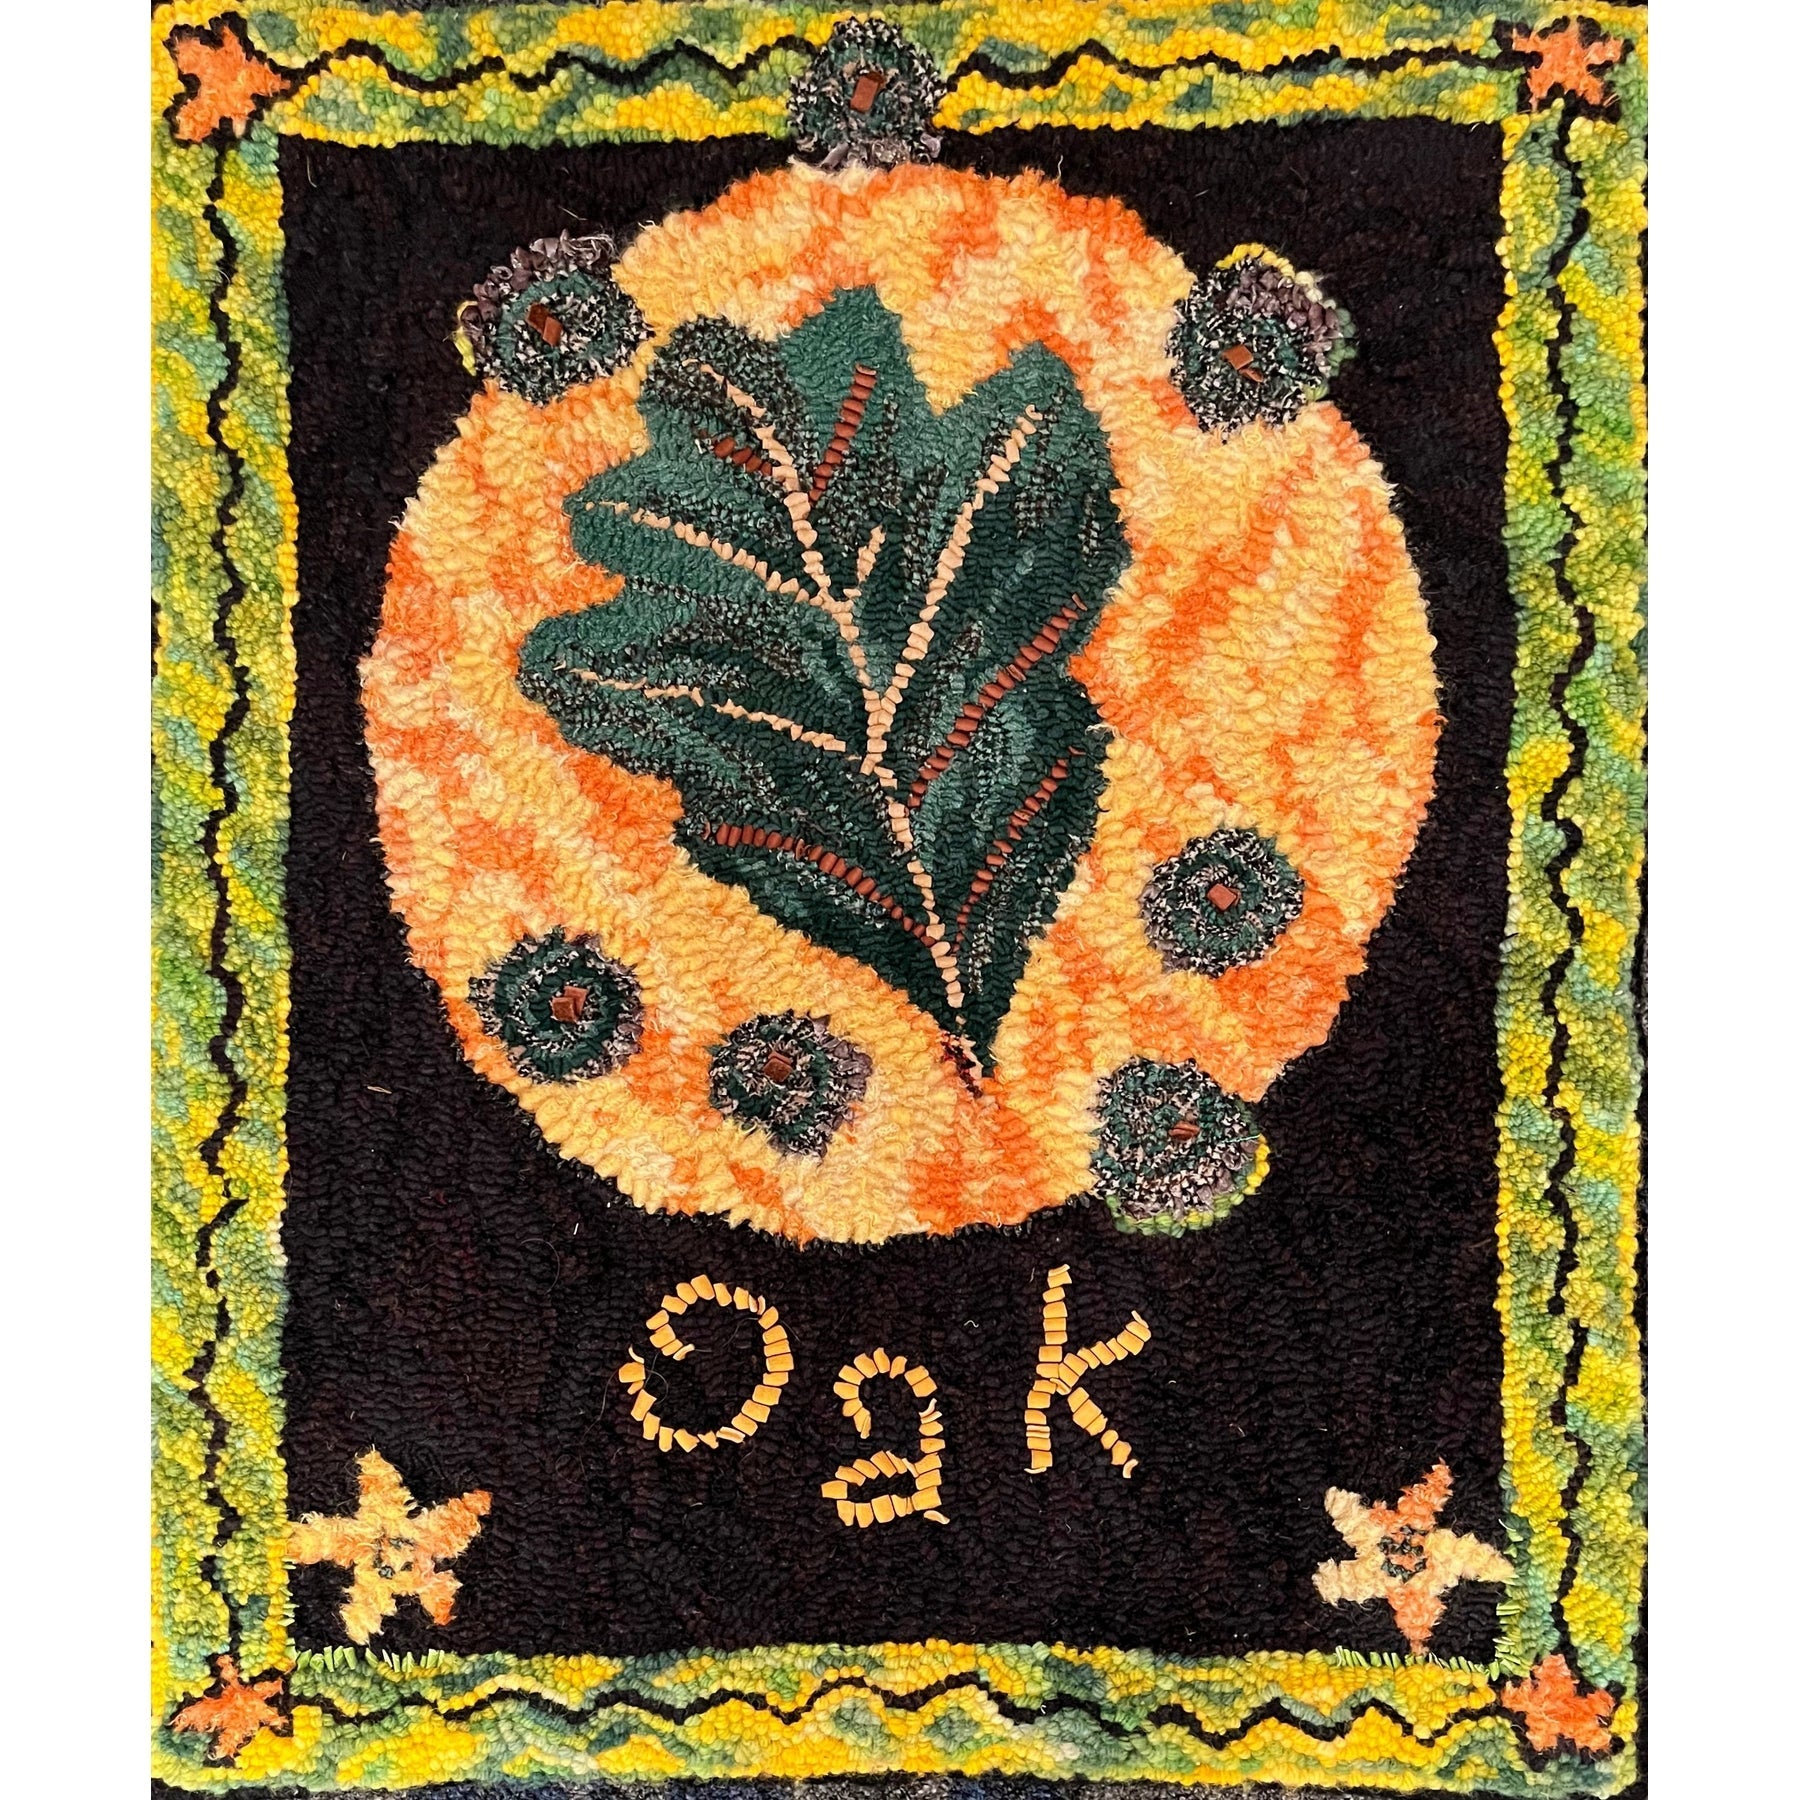 Oak, rug hooked by Judy Kielczewski